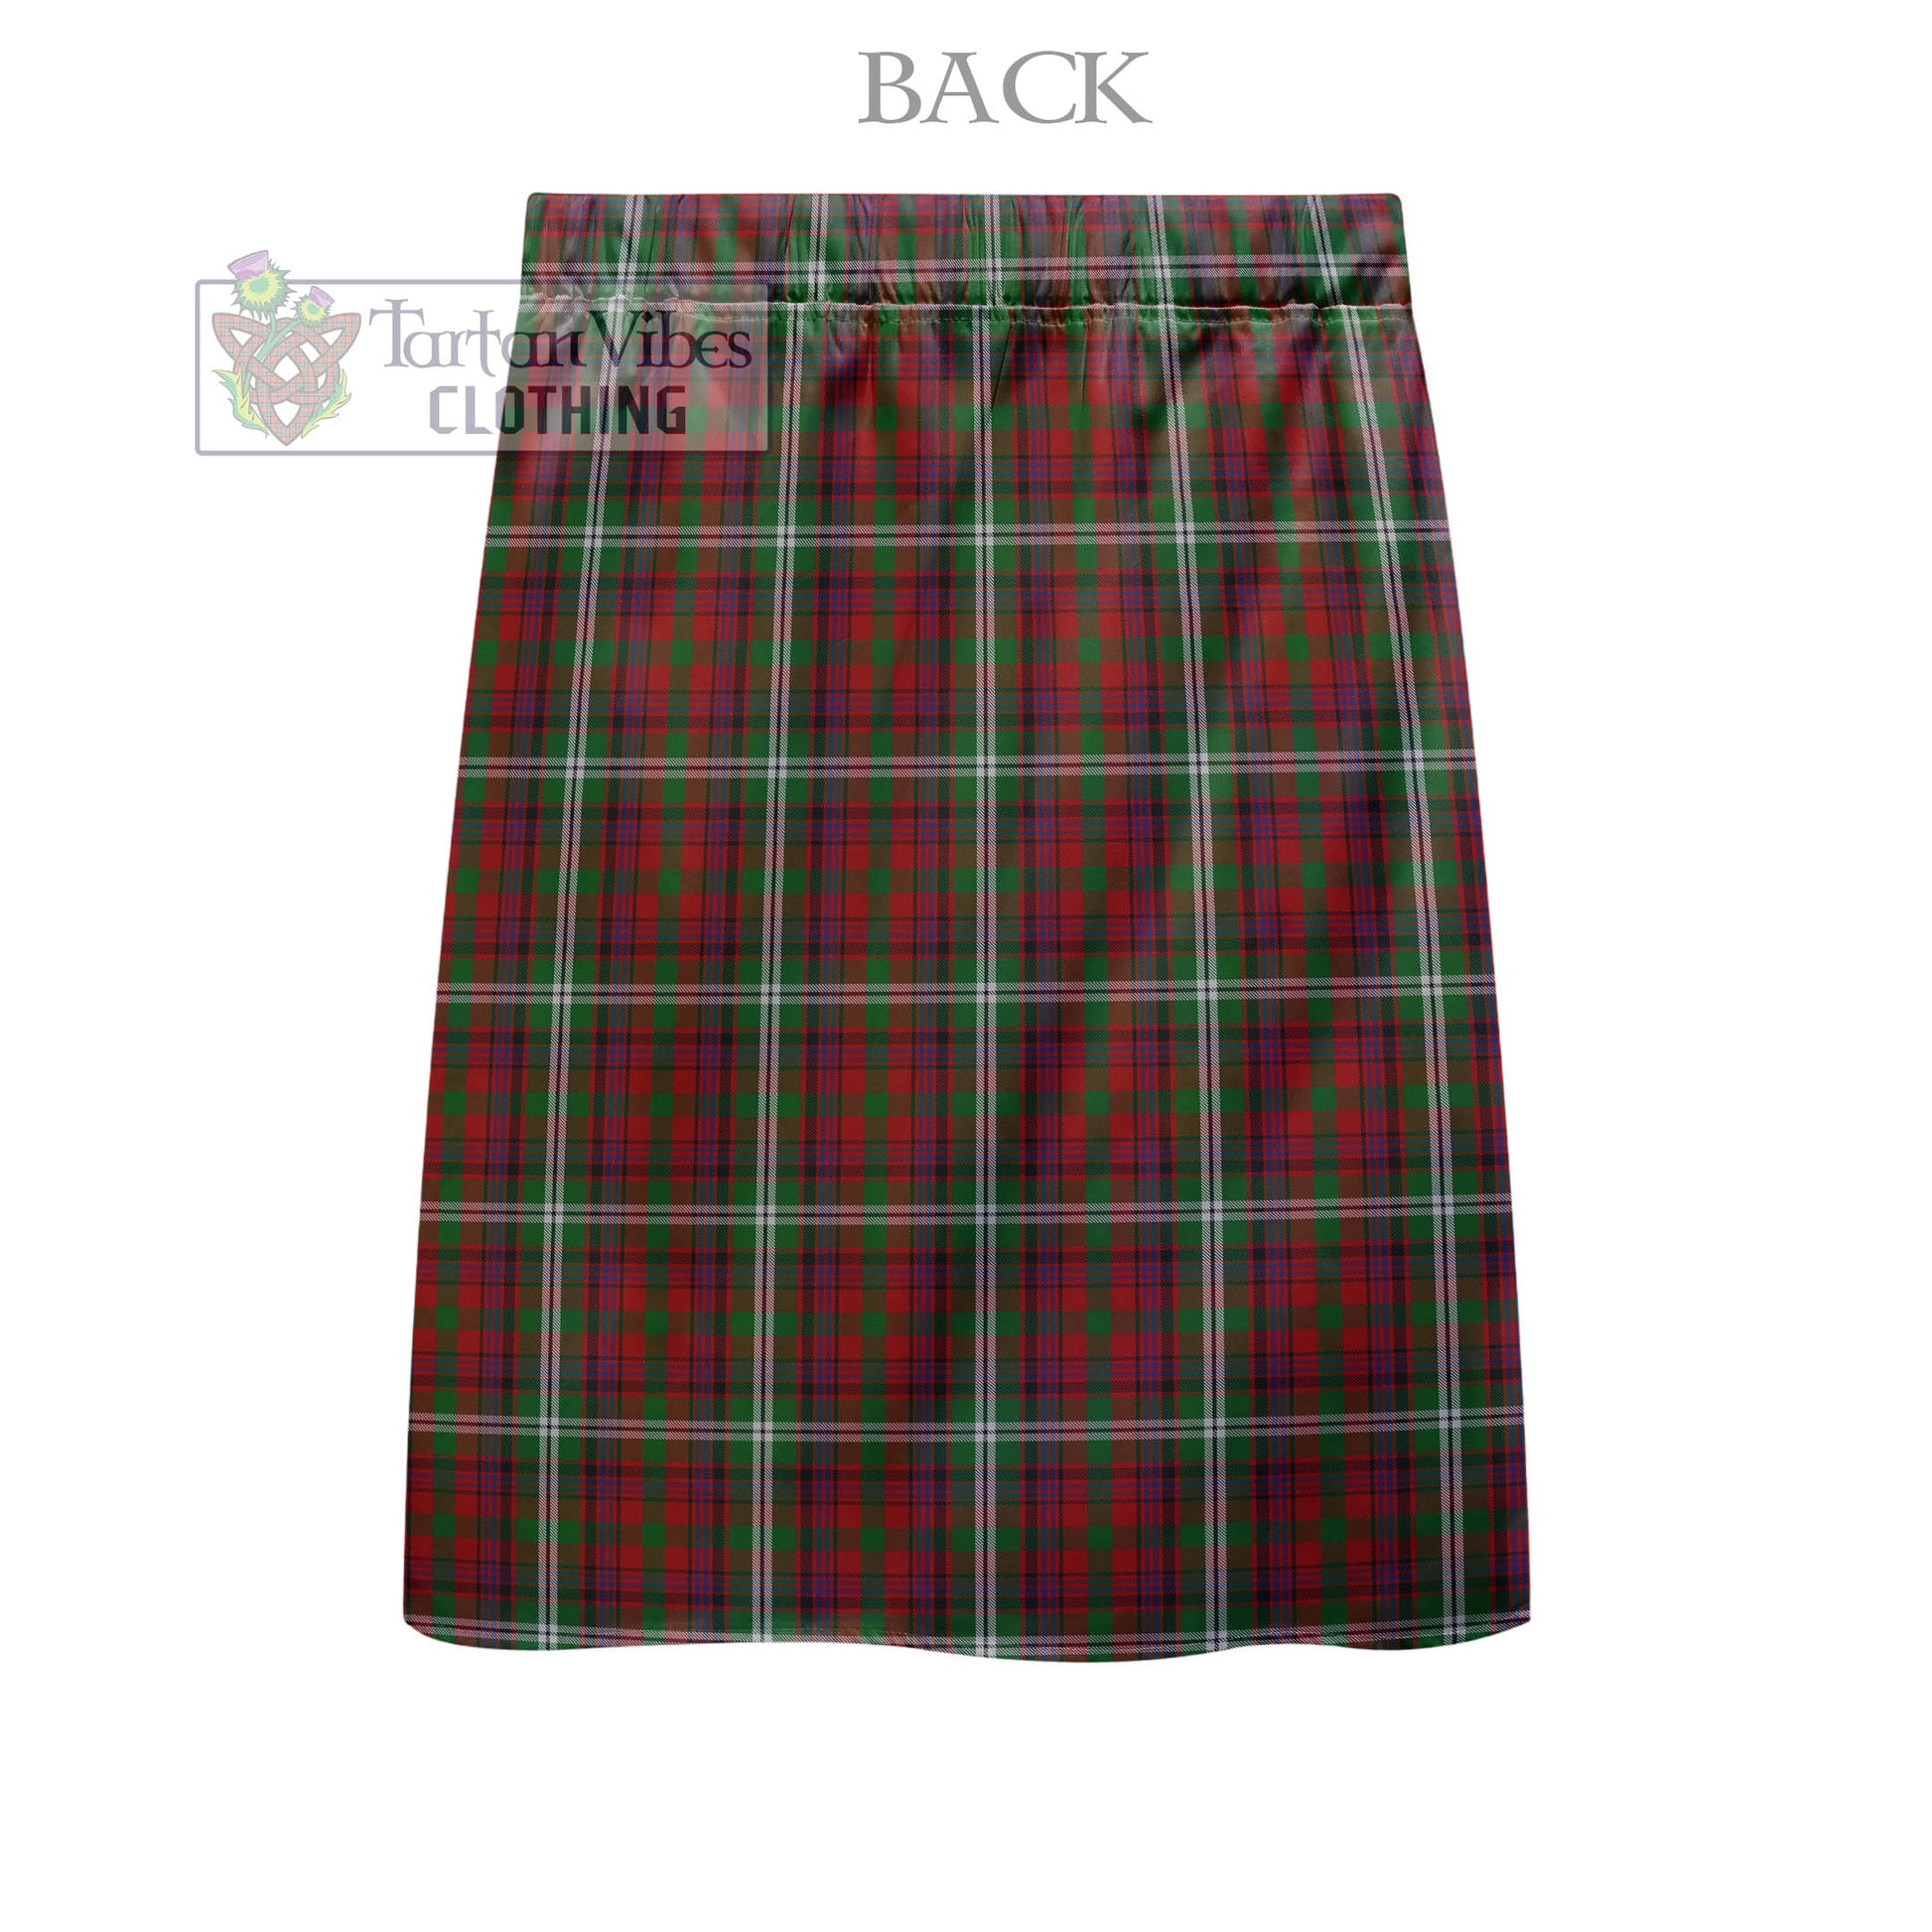 Tartan Vibes Clothing Maguire Tartan Men's Pleated Skirt - Fashion Casual Retro Scottish Style